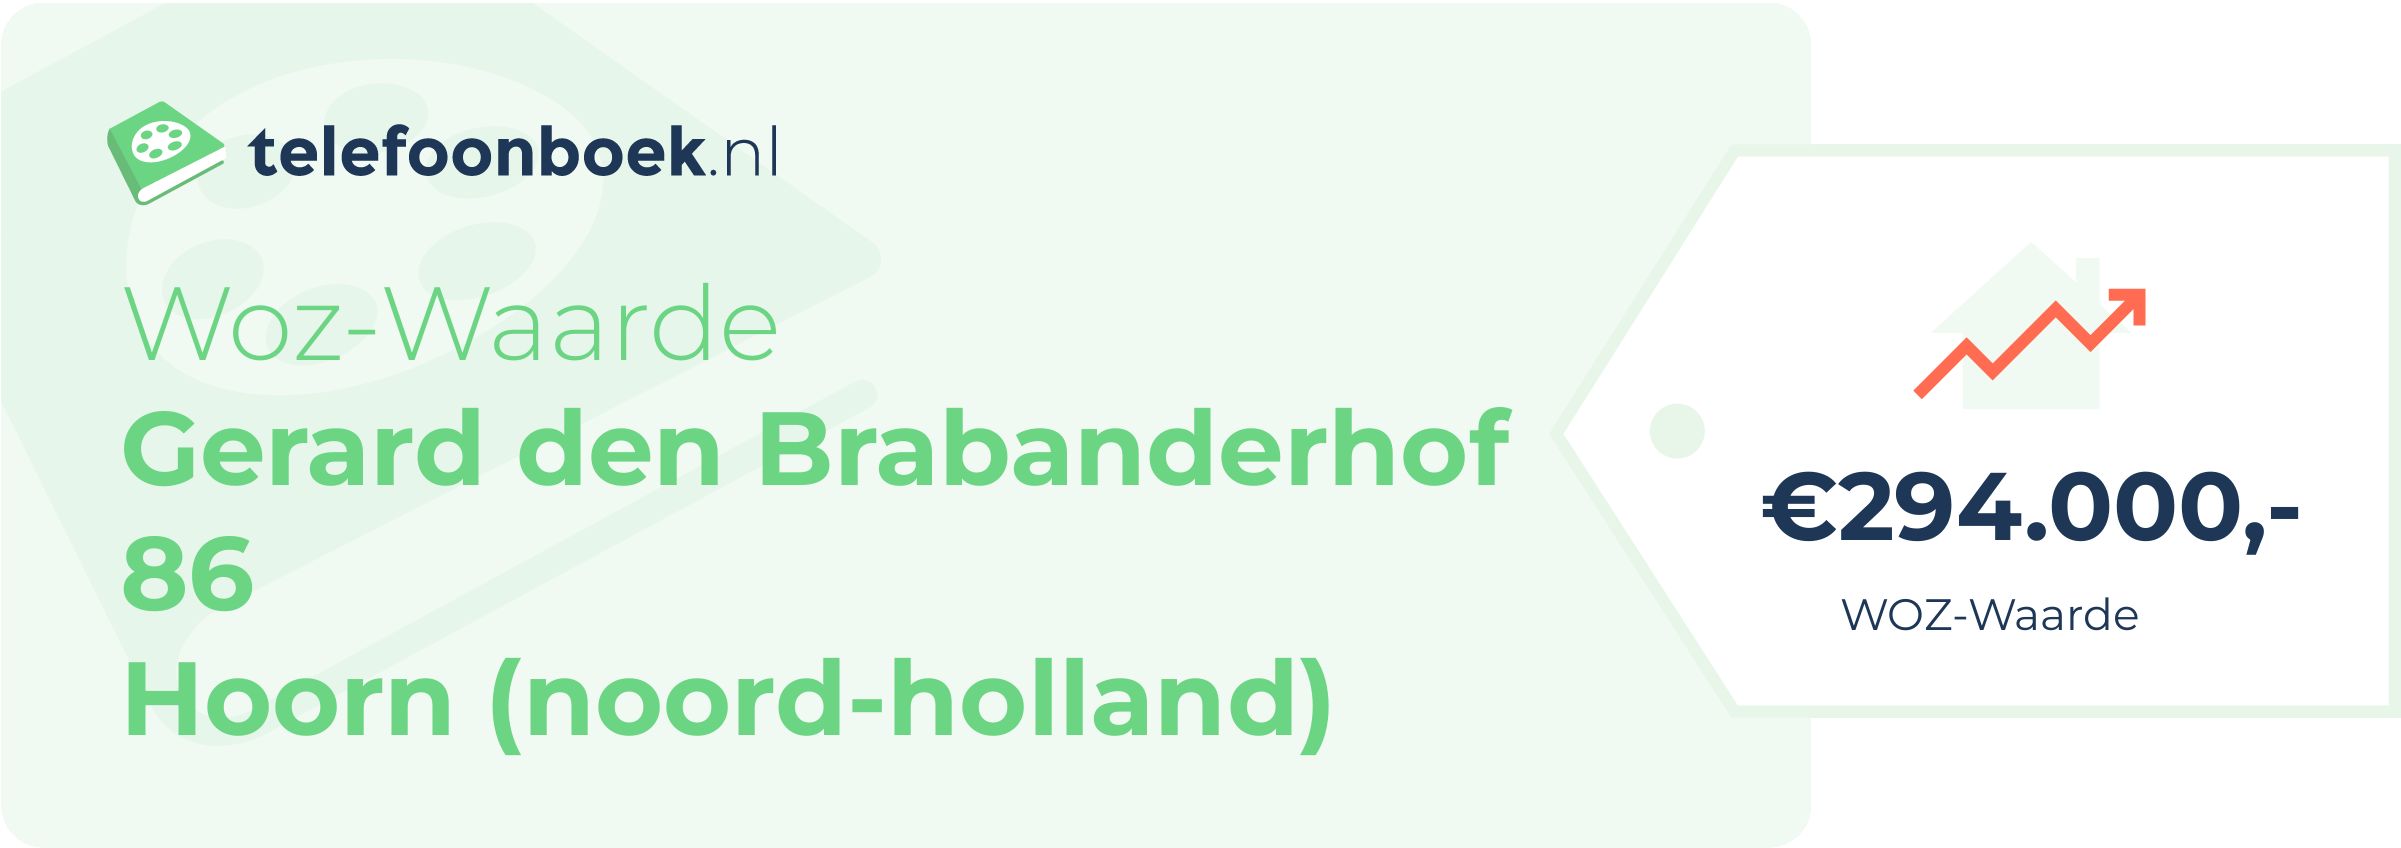 WOZ-waarde Gerard Den Brabanderhof 86 Hoorn (Noord-Holland)